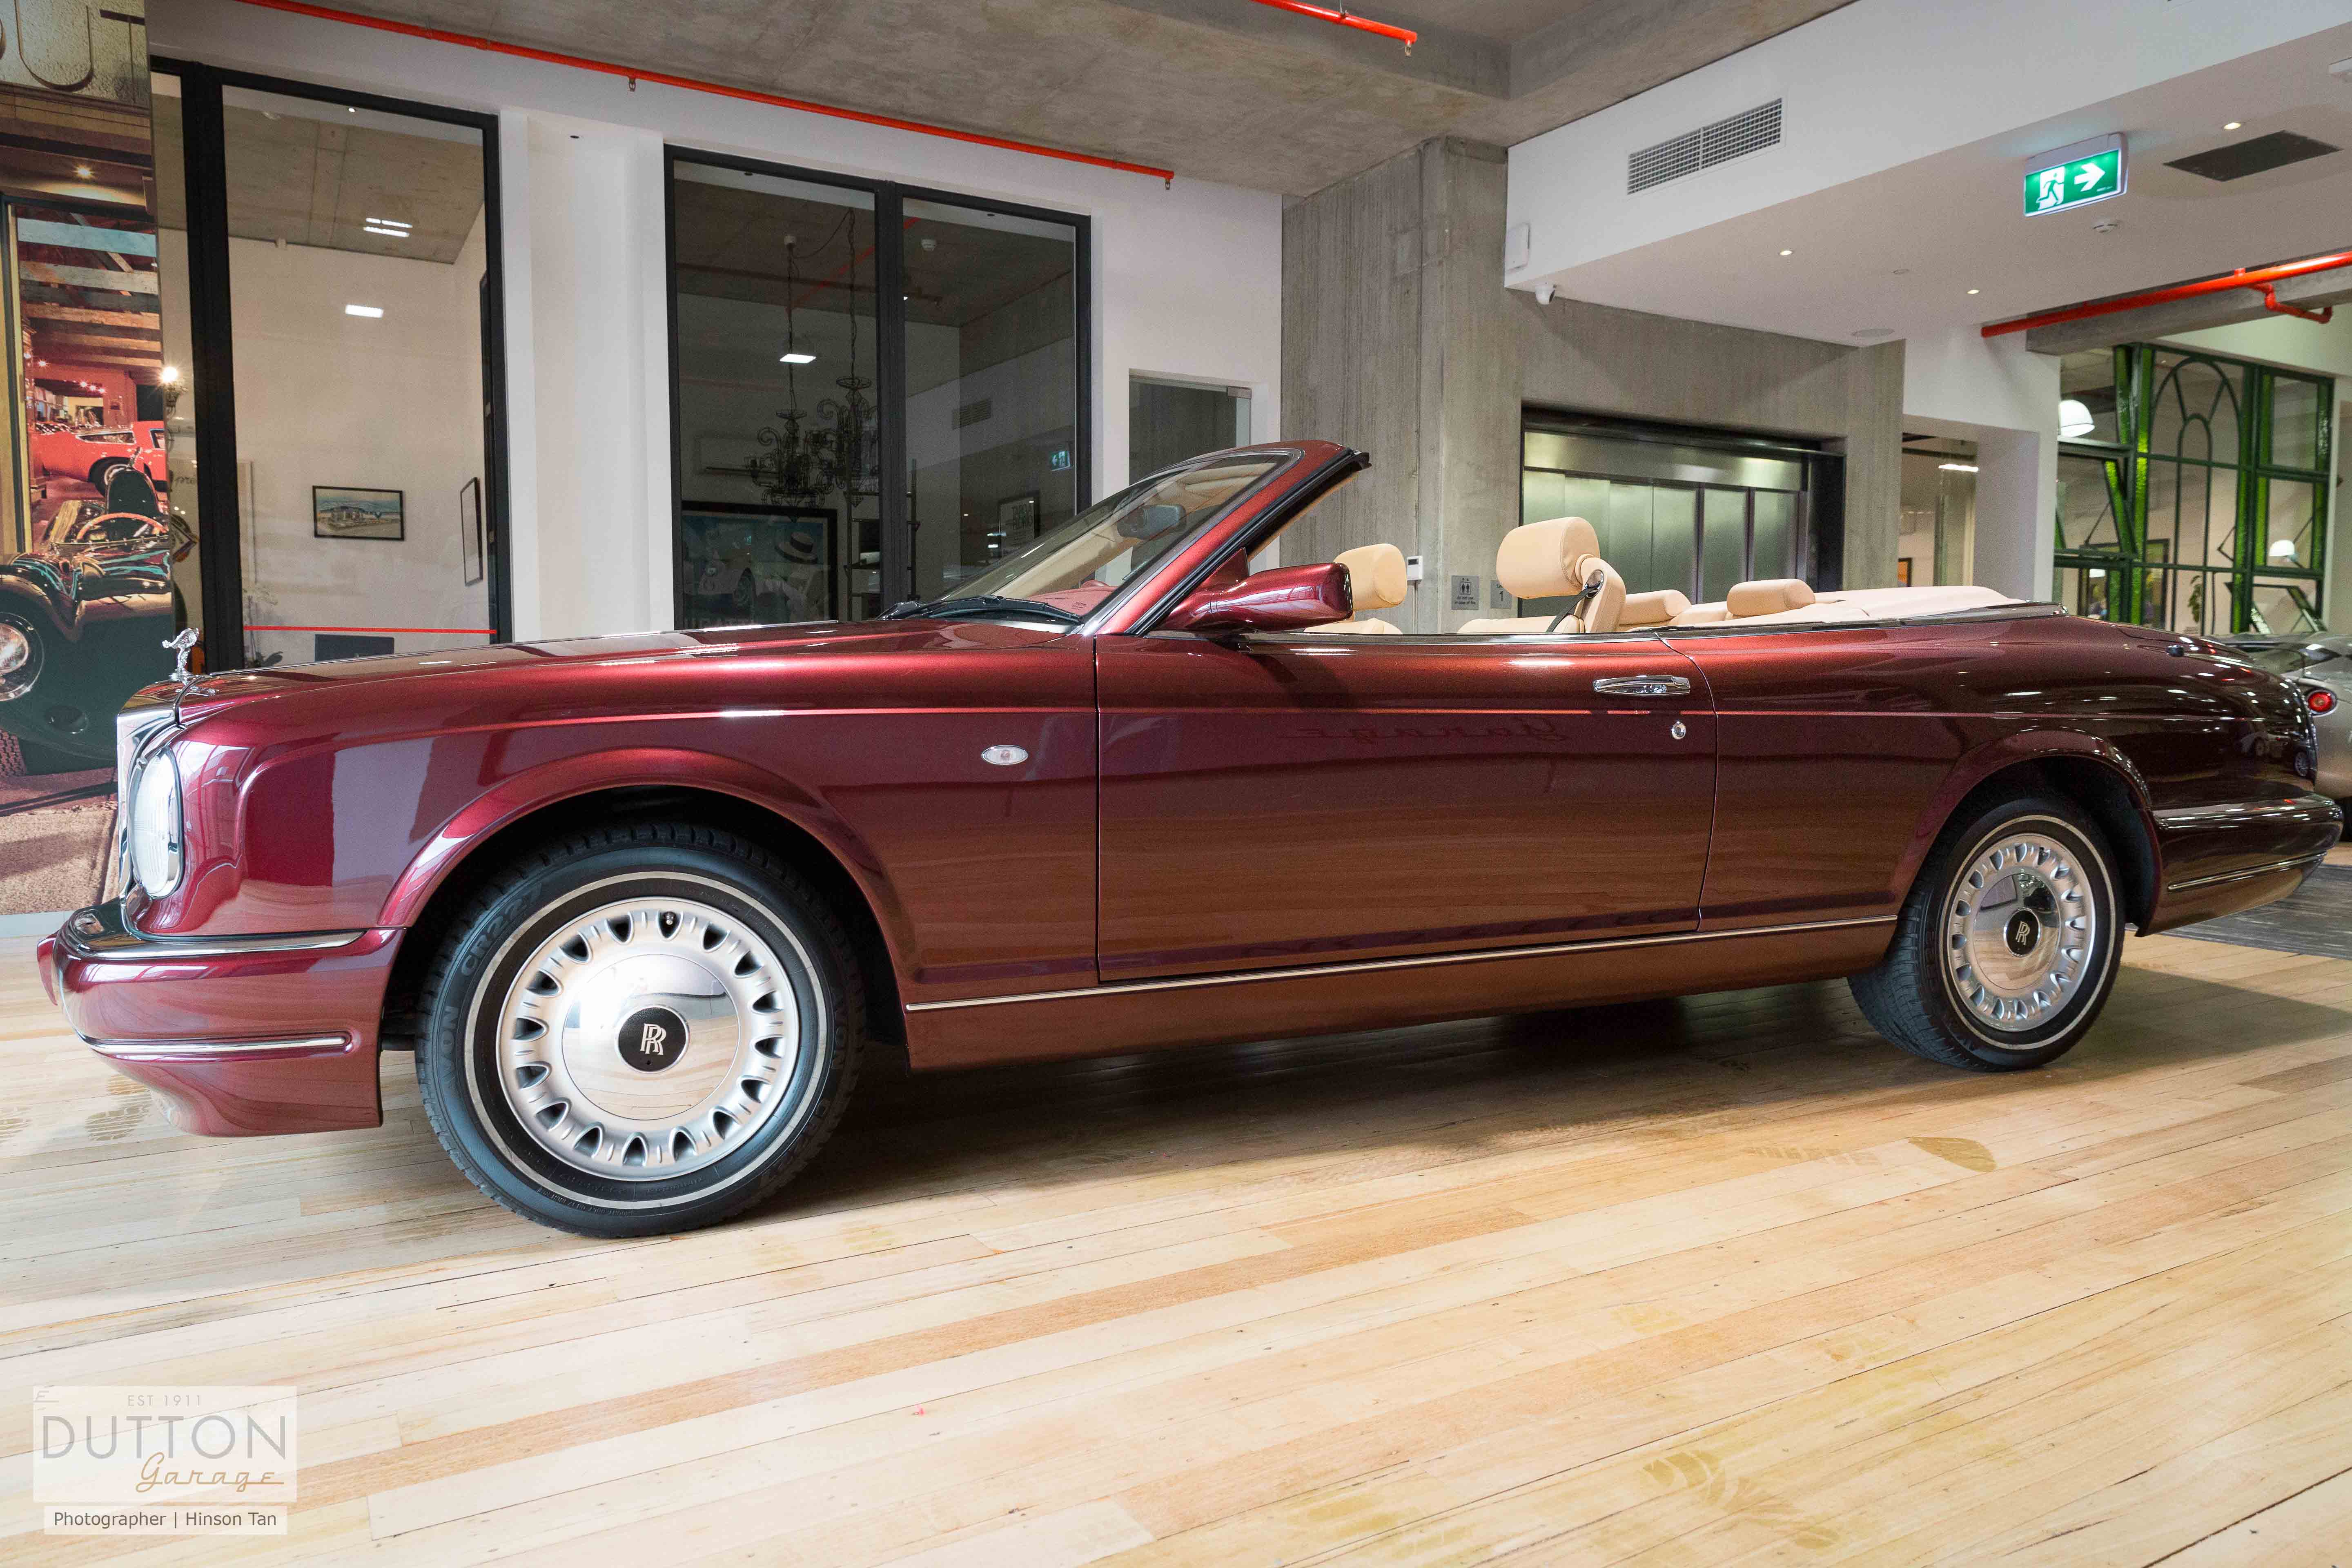 2001 Rolls Royce Corniche V Convertible For Sale Dutton Garage